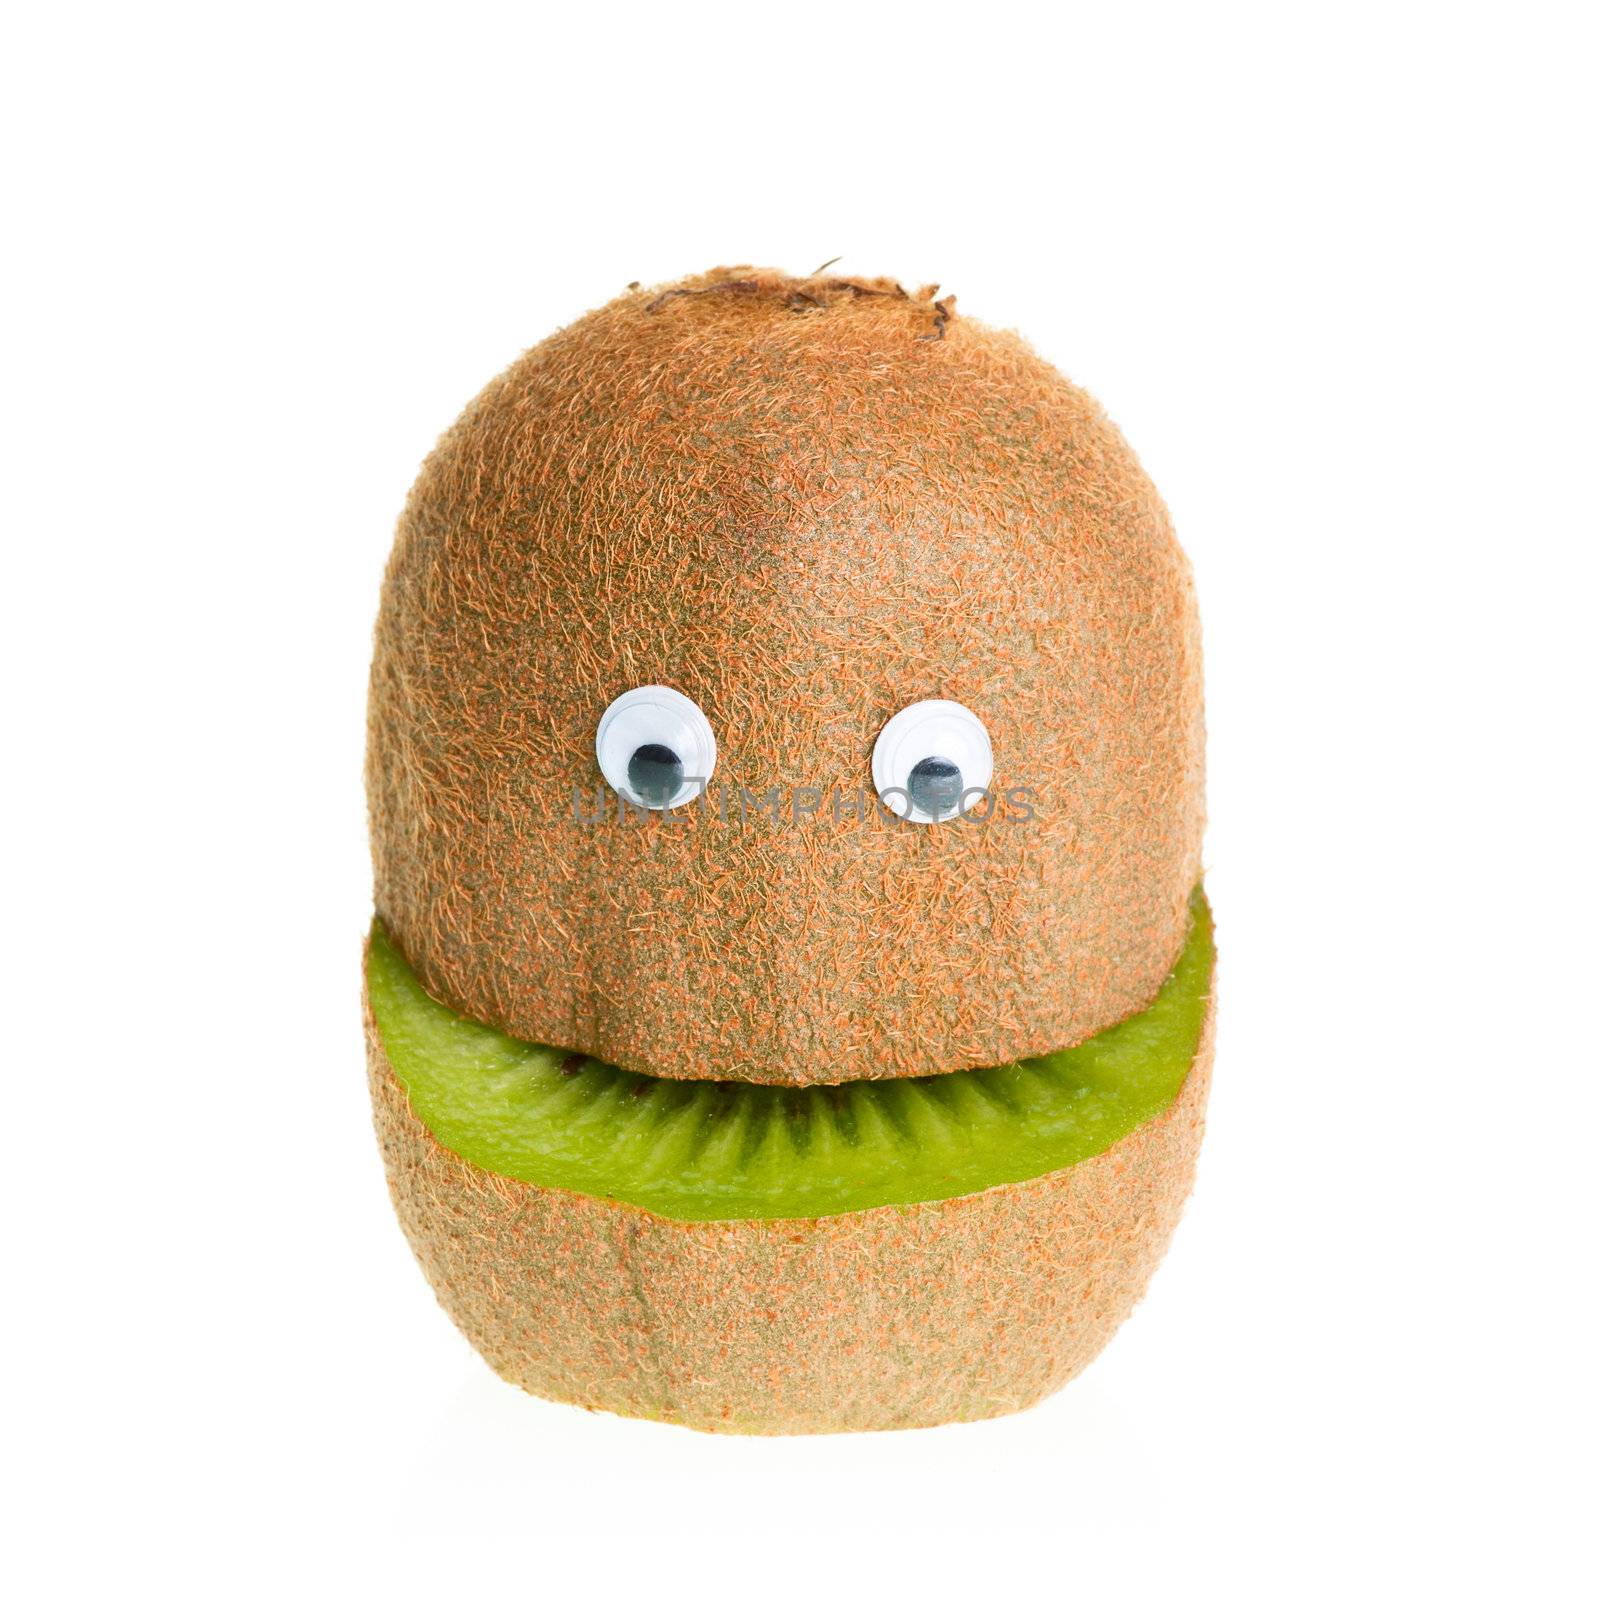 Kiwifruit Character by naumoid